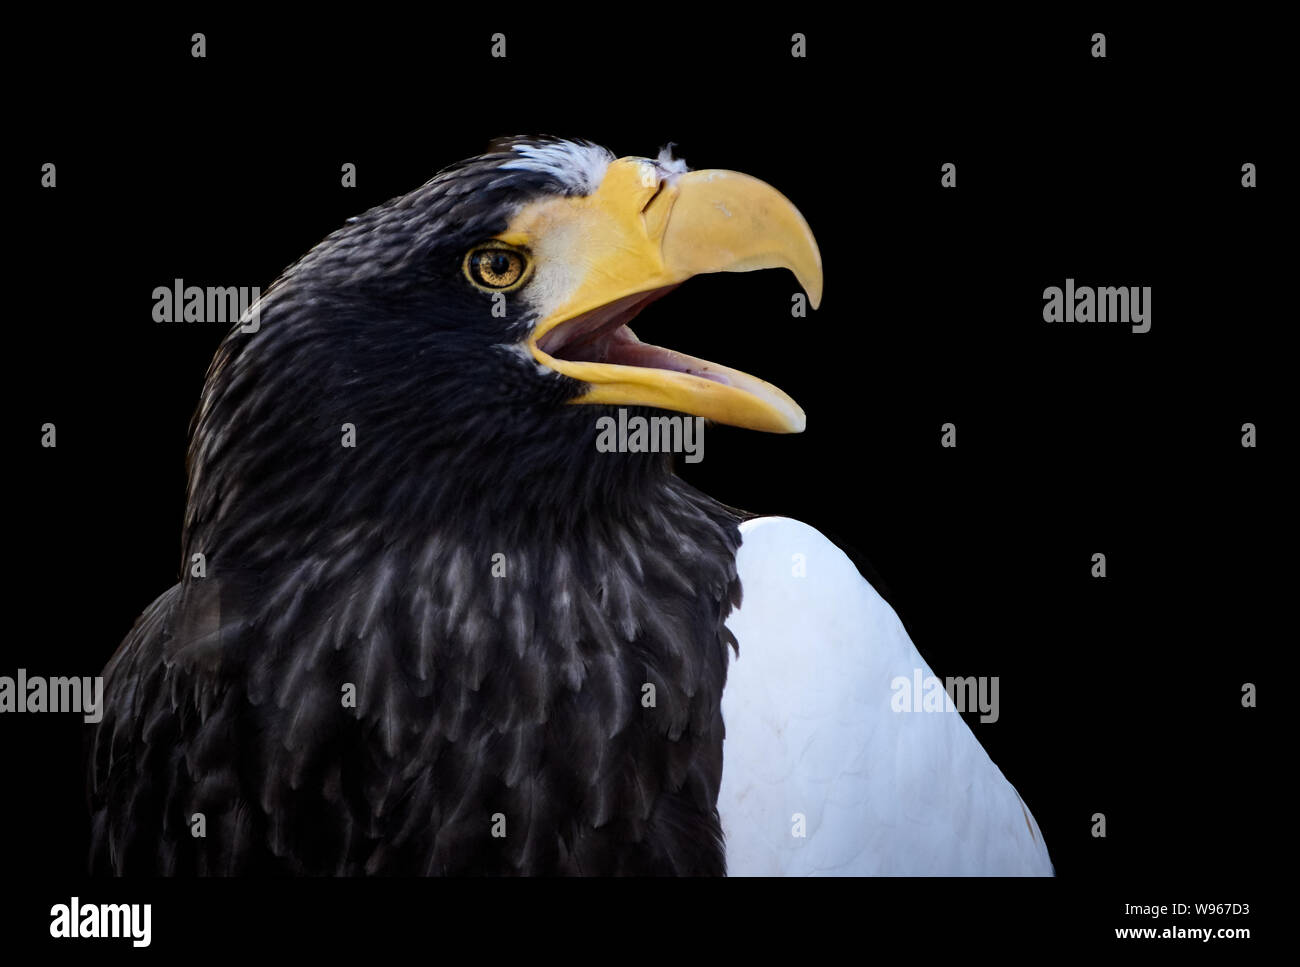 Retrato de un águila vista gigante gritando contra fondo negro (Haliaeetus pelagicus) Foto de stock